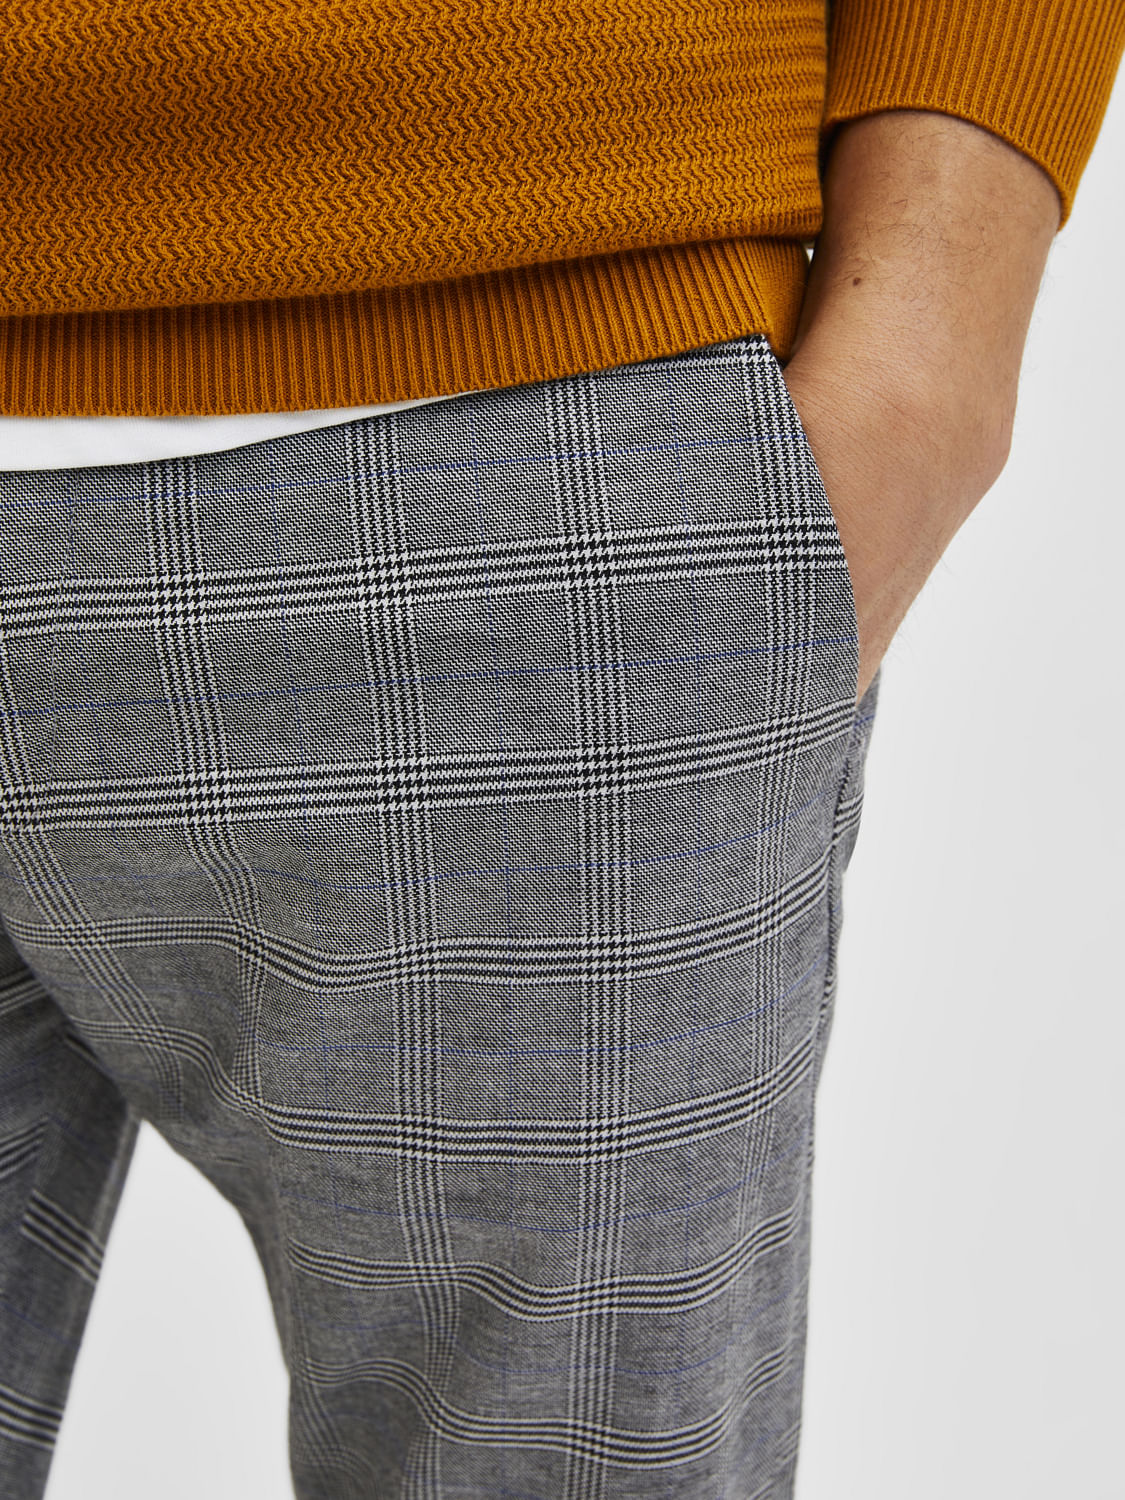 Buy Men's White Checked Trousers Online at Bewakoof